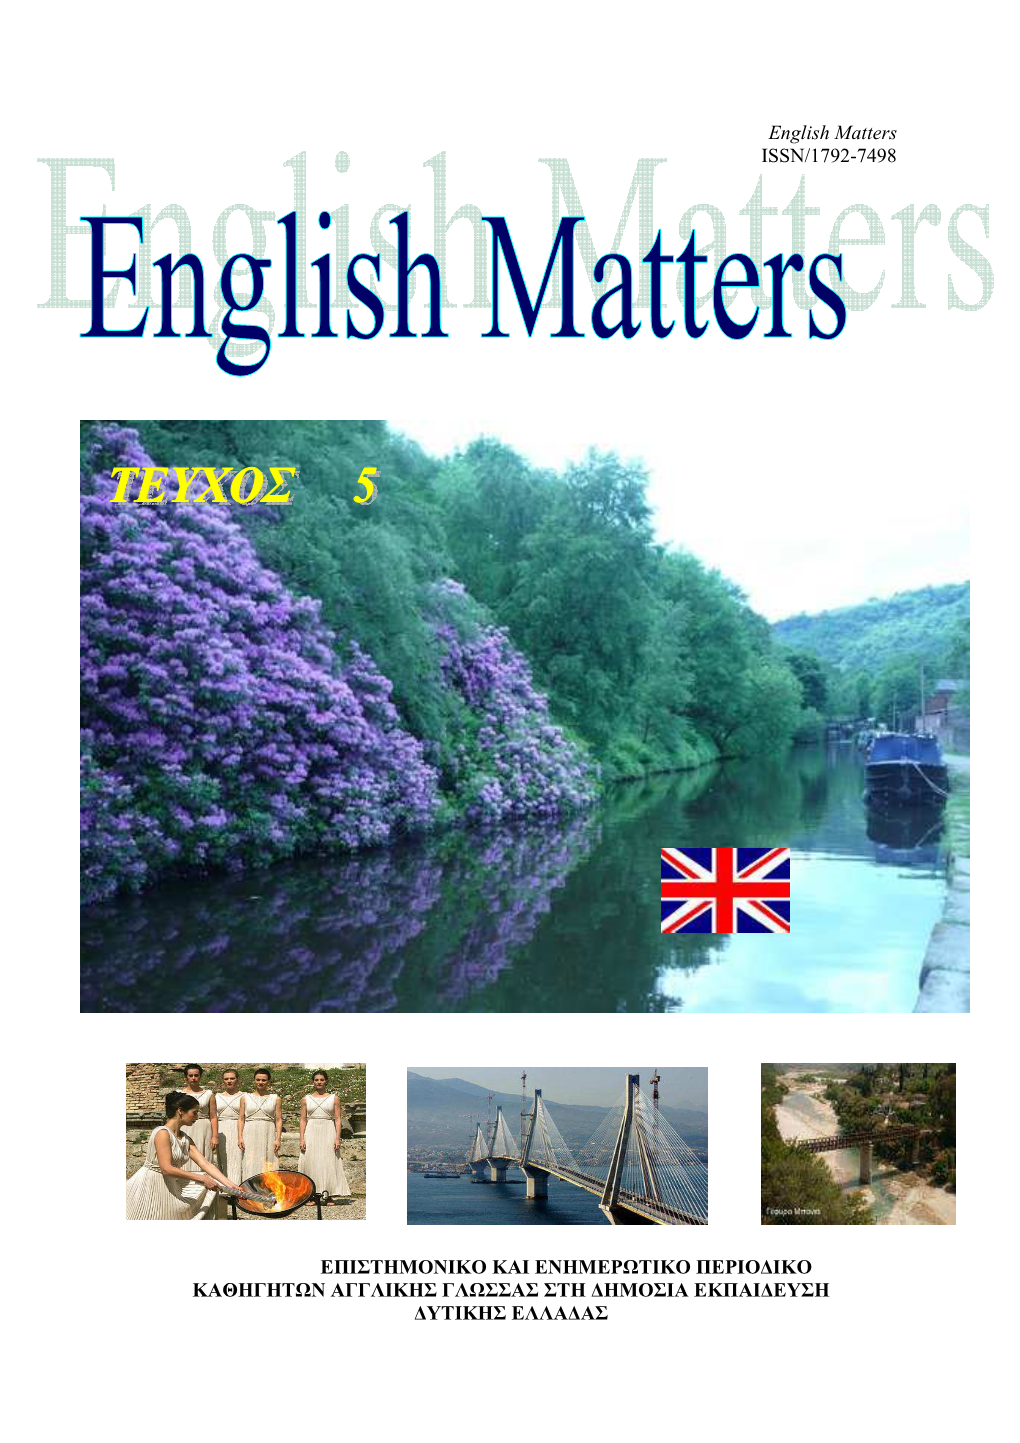 English Matters ISSN/1792-7498 ΕΠΙΣΤΗΜΟΝΙΚΟ ΚΑΙ